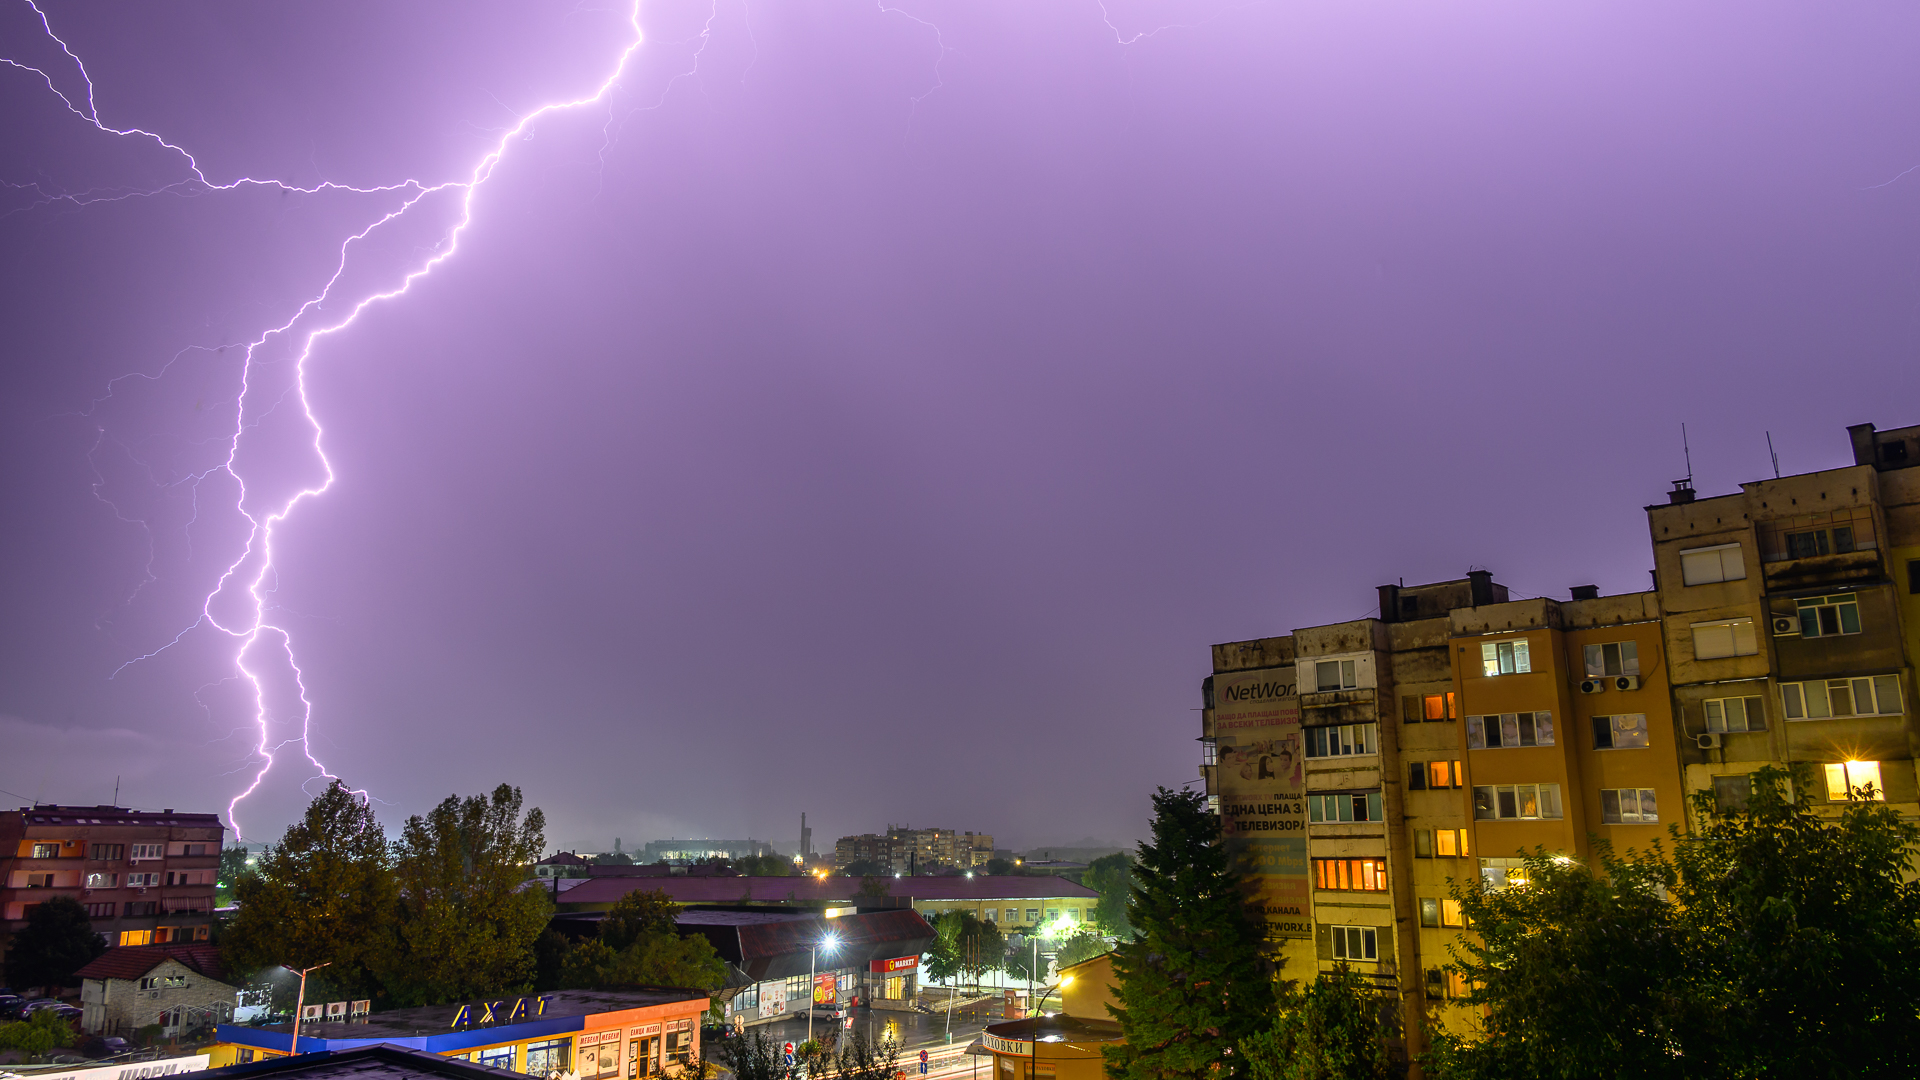 Гръмотевична буря над града от Milen Mladenov - resco